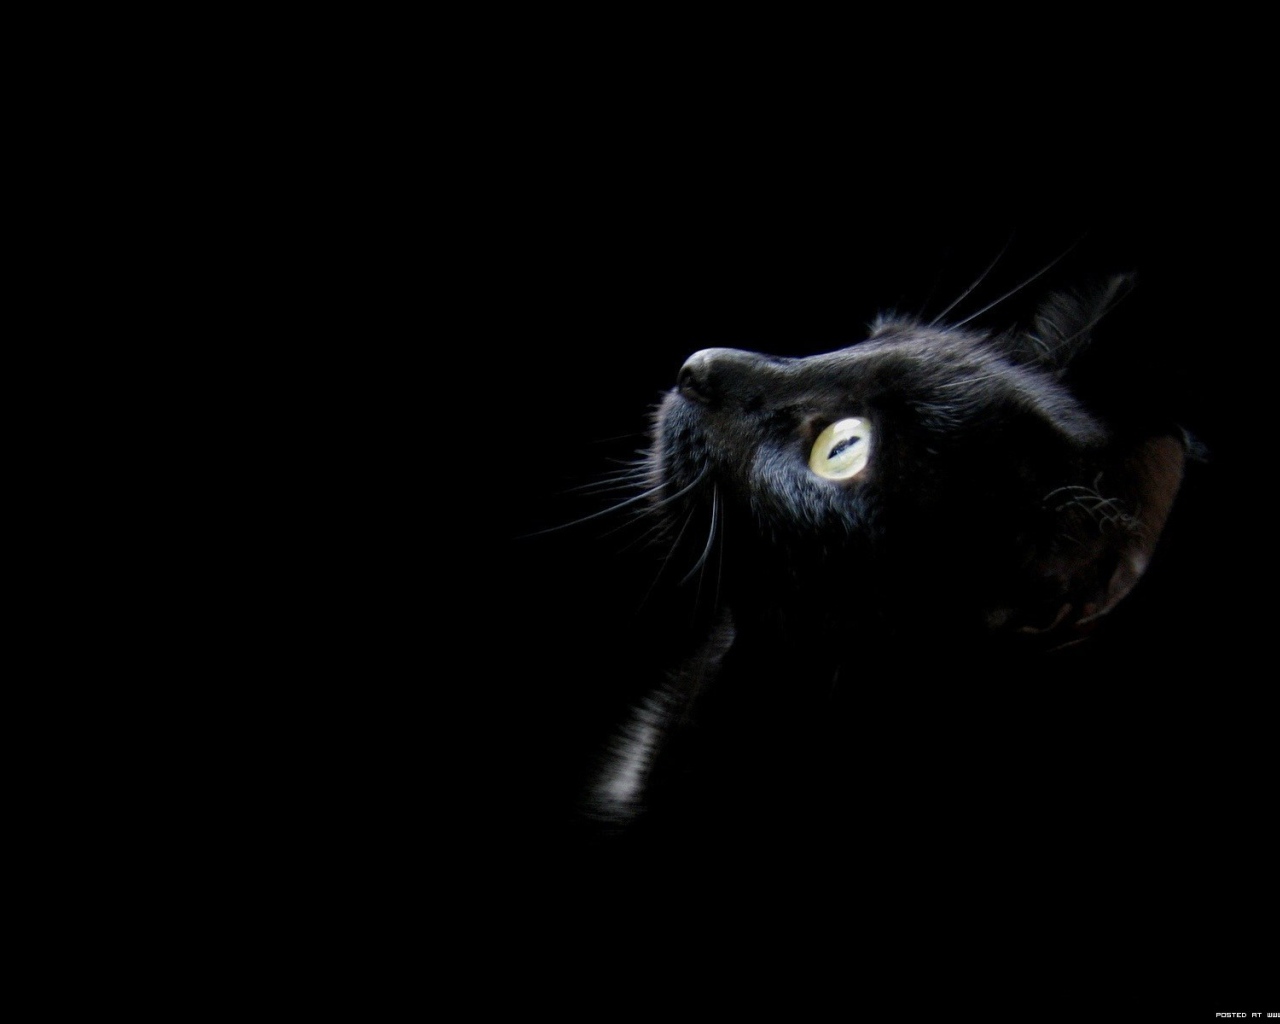 Amusing kitten on a black background